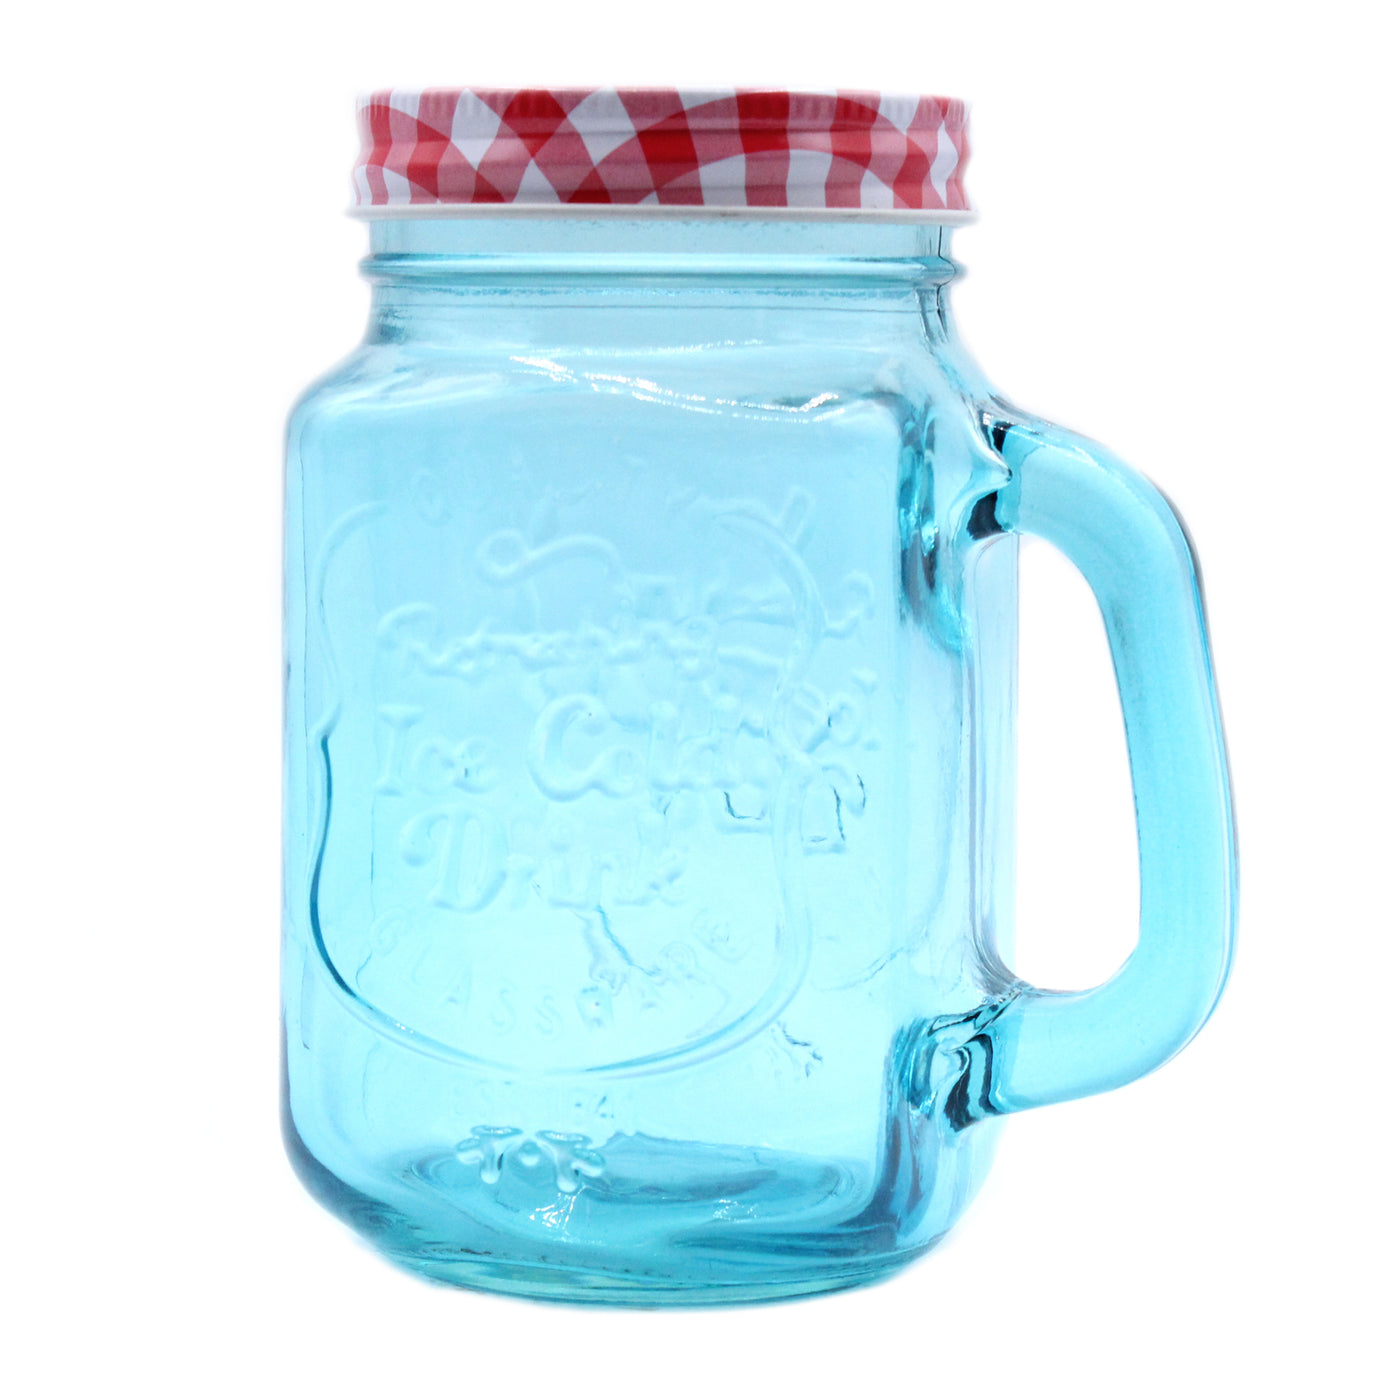 Retro Blue Mason Jar For Cold Drinks.